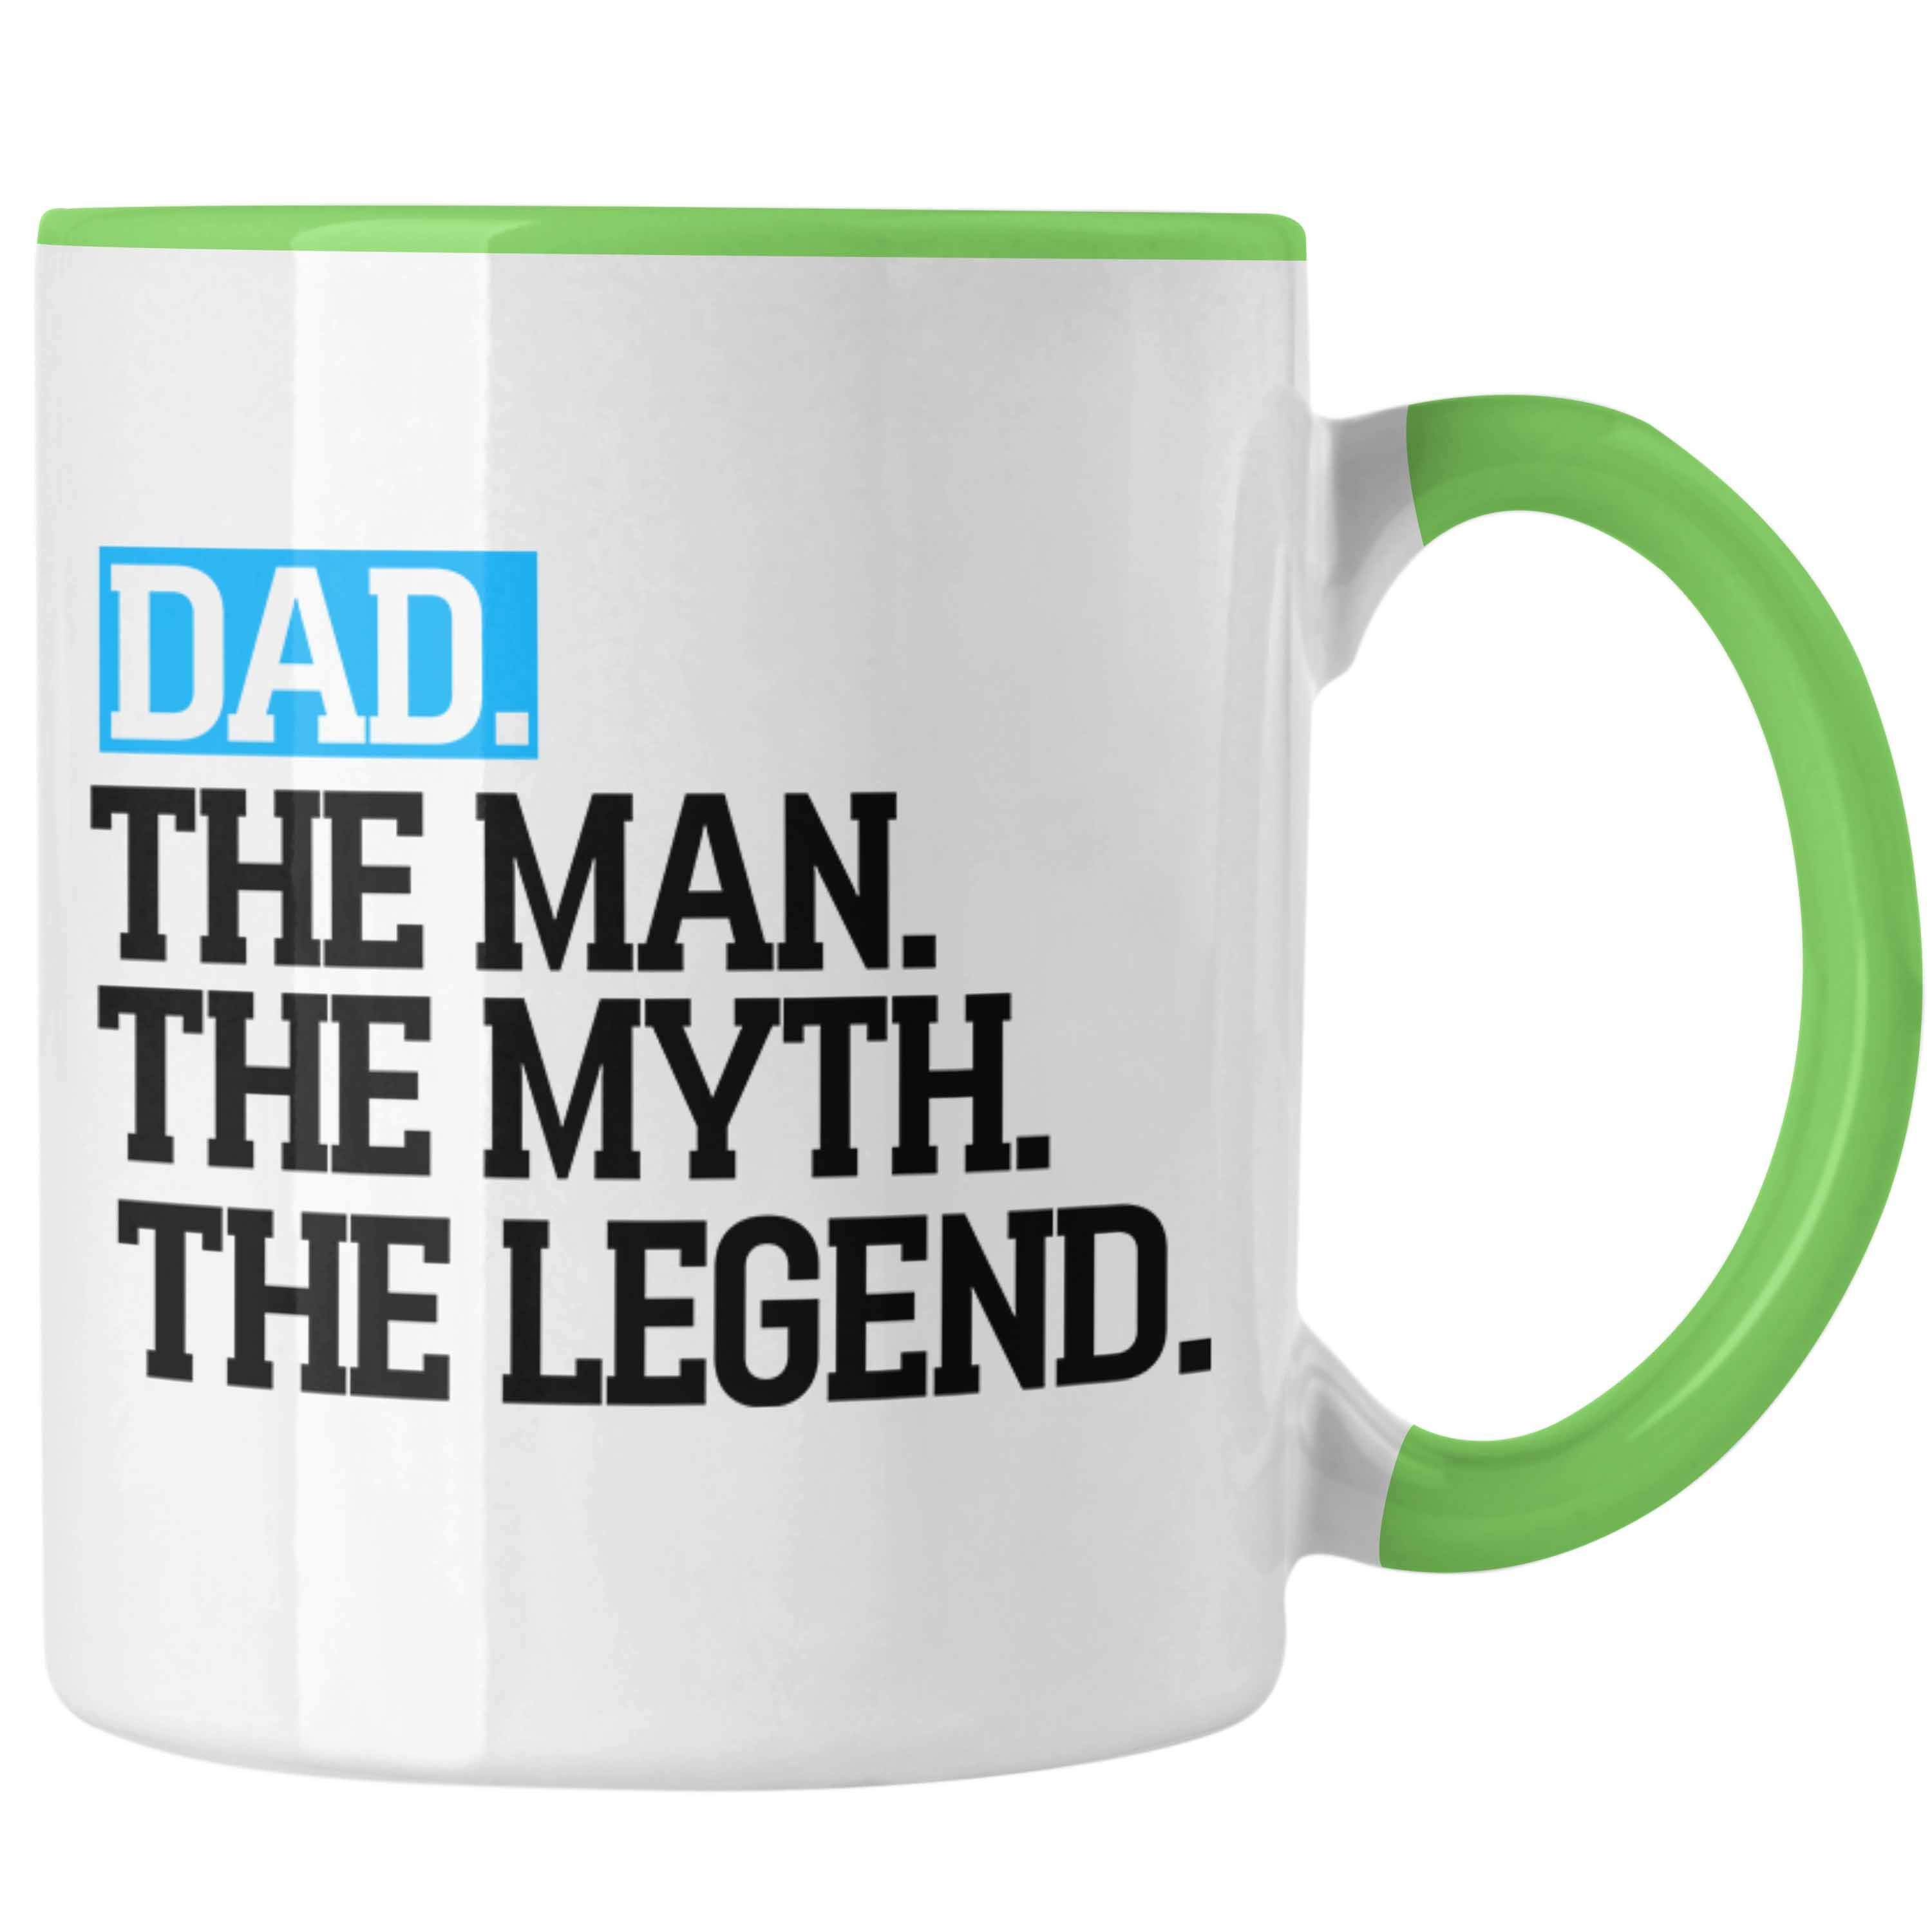 Vatertag Lustig Spru "Dad Man für The Trendation The The Tasse Myth Grün Vater Legend" Tasse